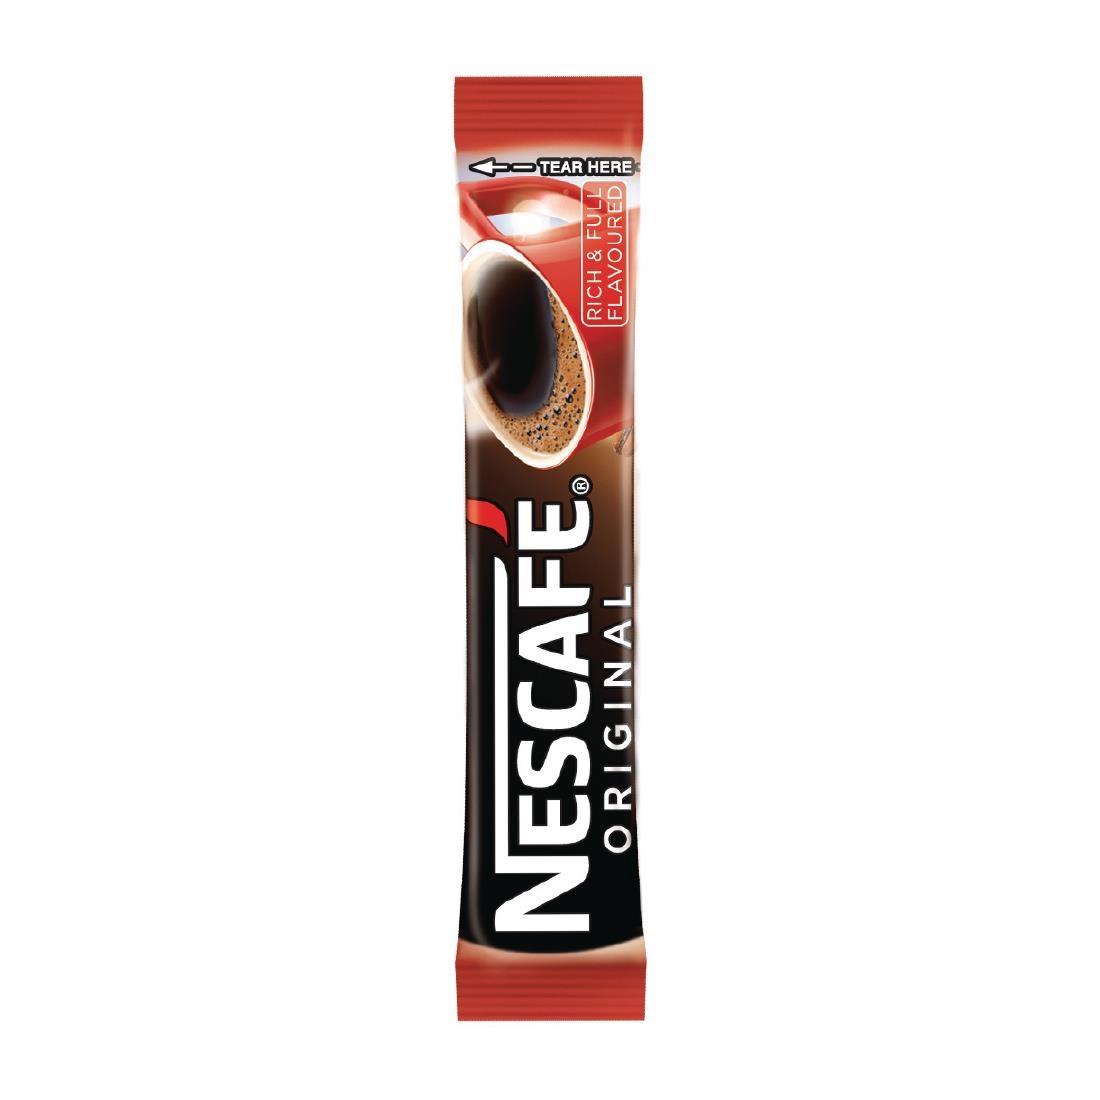 Nescafe Coffee Original Stick (Pack of 200) - DN806  - 1